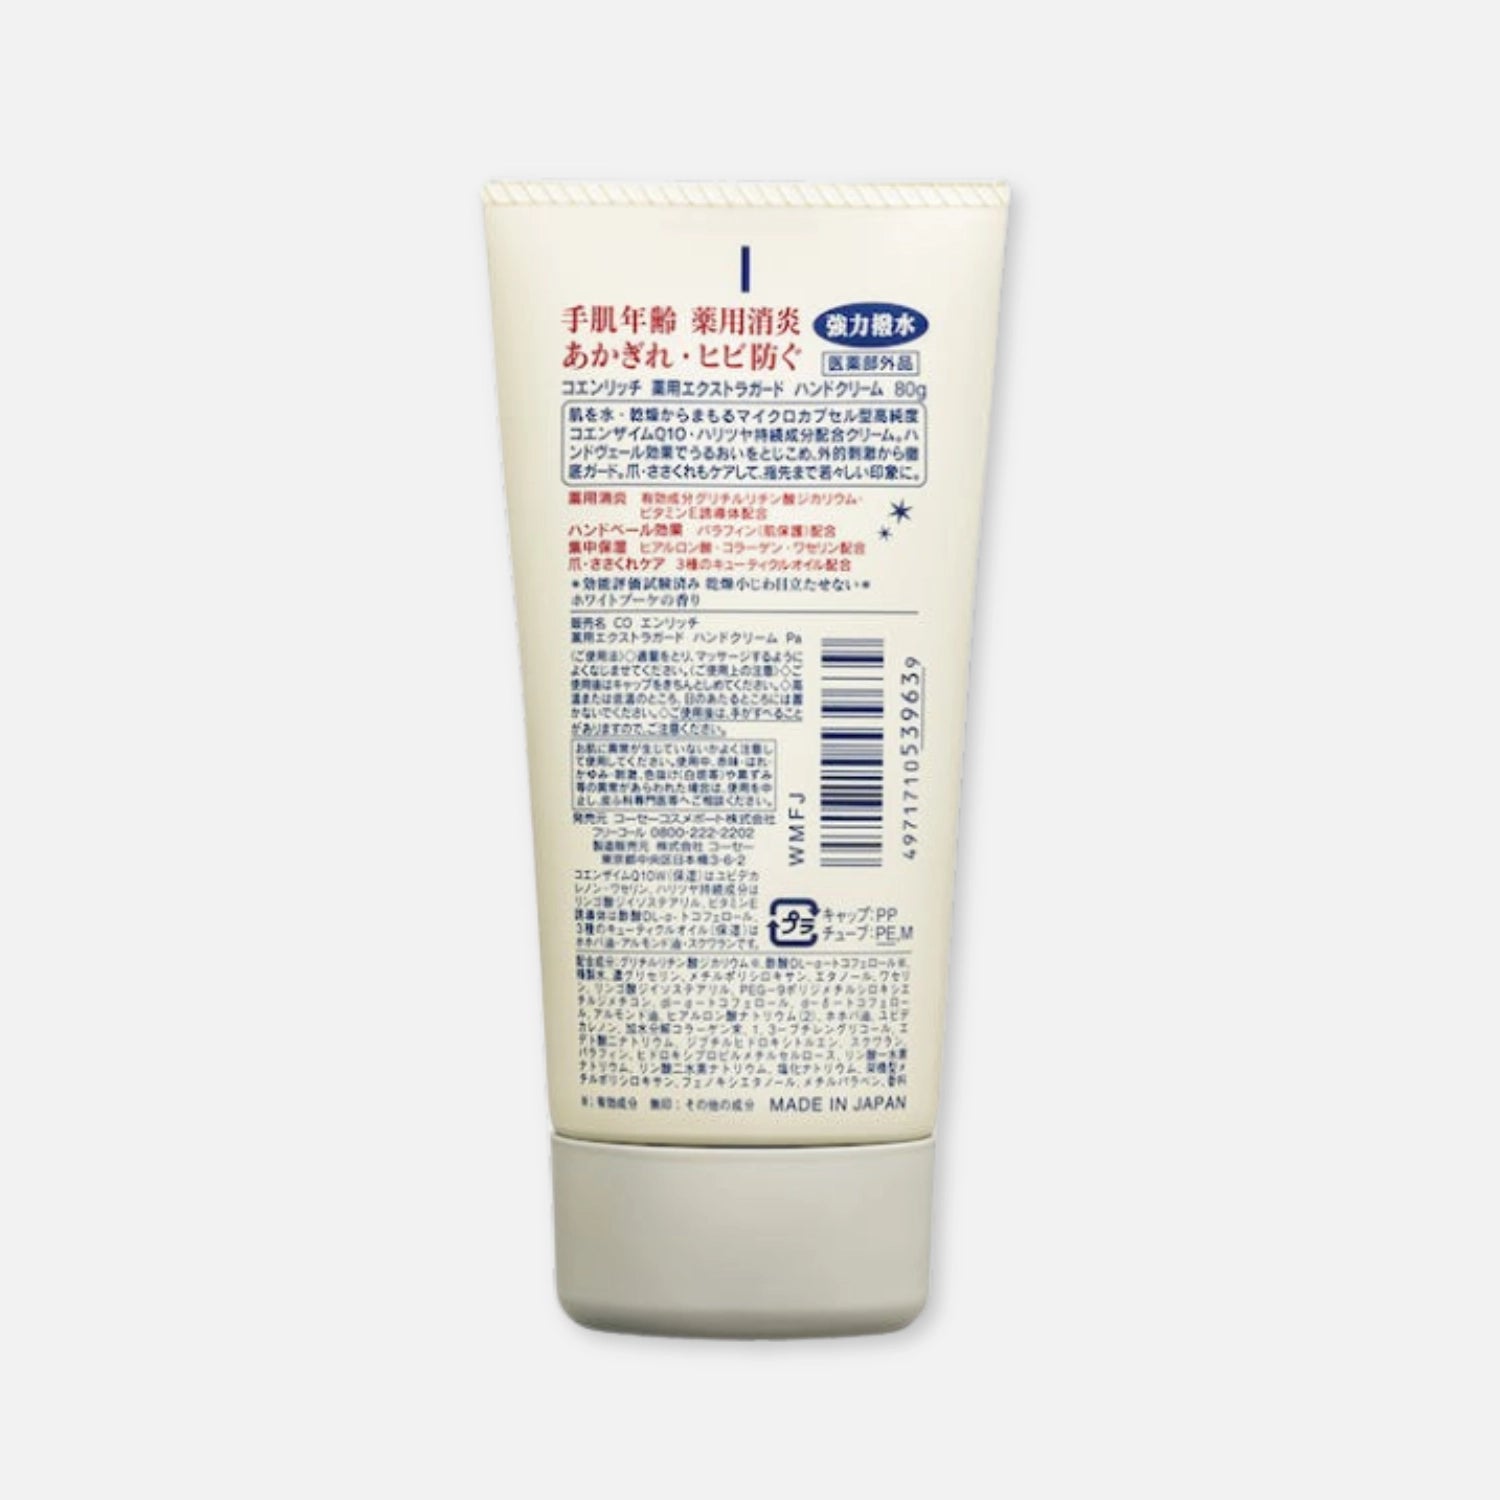 Kose Coenrich Q10+ Extra Guard (White Bouquet) Hand Cream 80g - Buy Me Japan